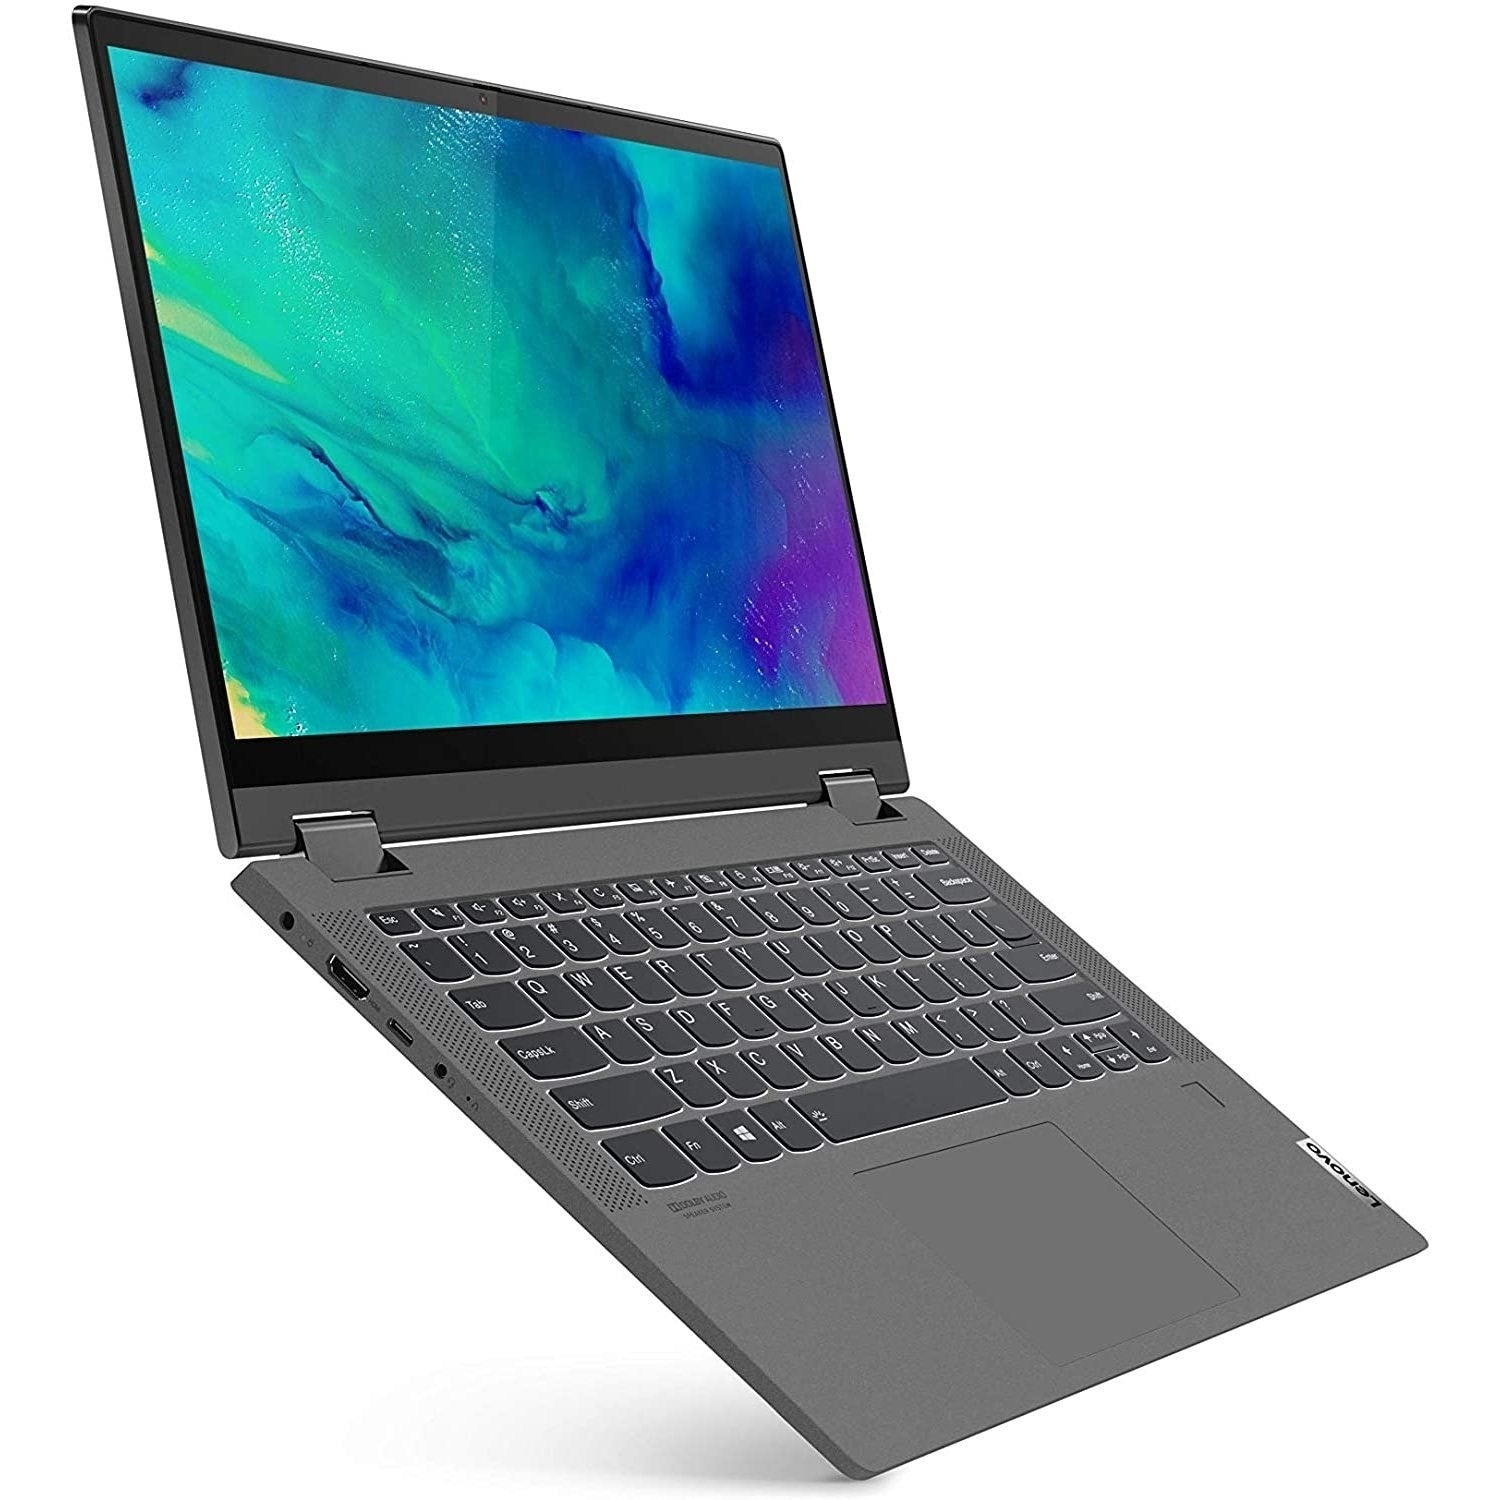 Lenovo Flex 5i Laptop, Intel Core i3-1005G1, 4GB RAM, 128GB SSD, 14", Platinum Grey